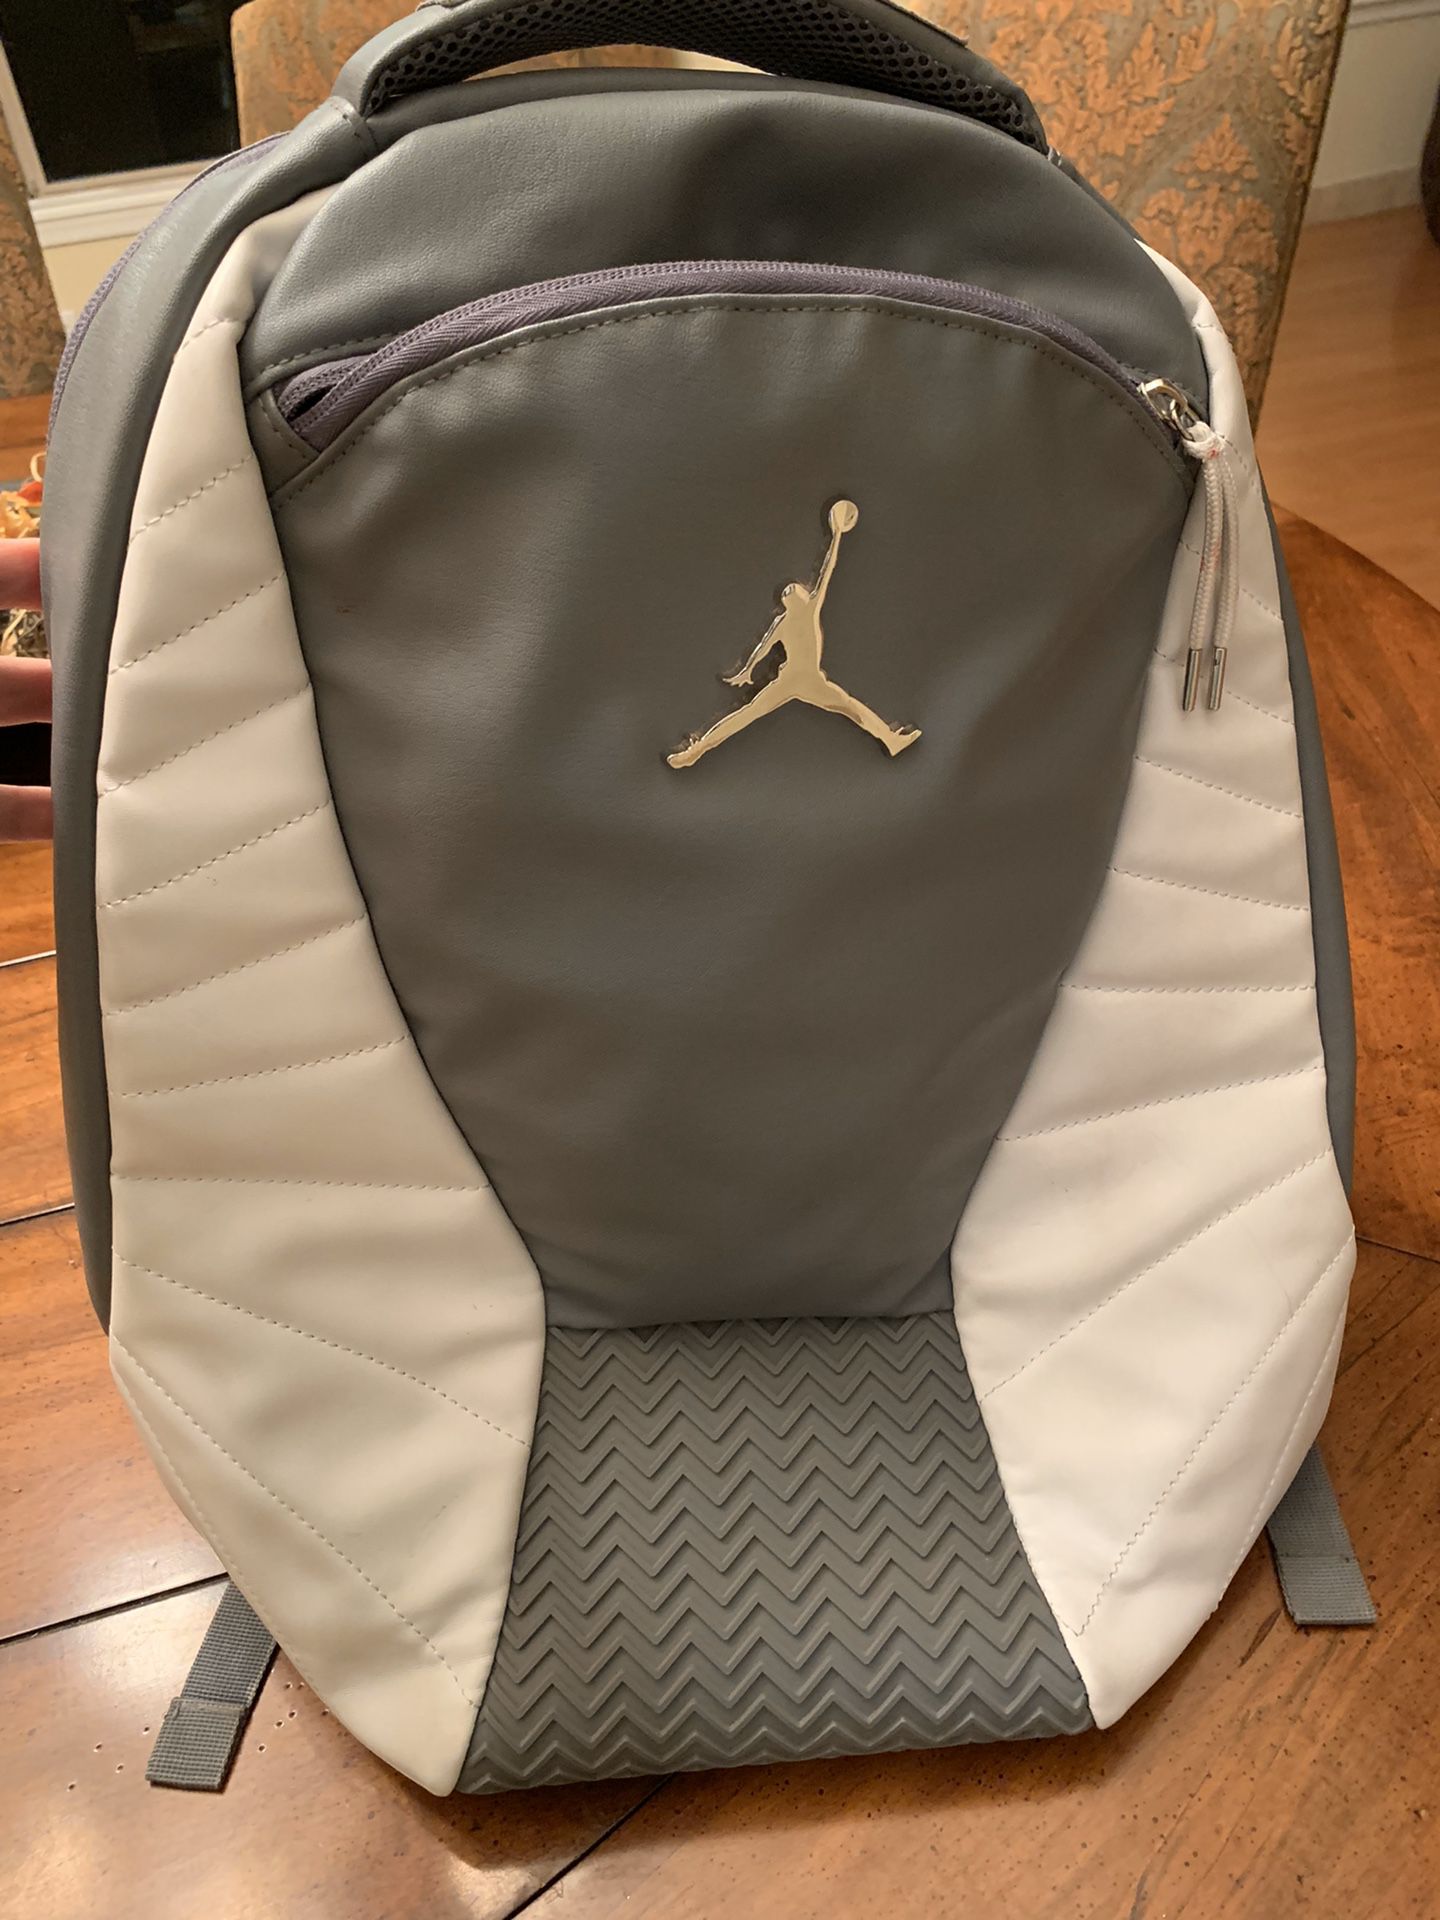 Jordan Backpack pristine condition